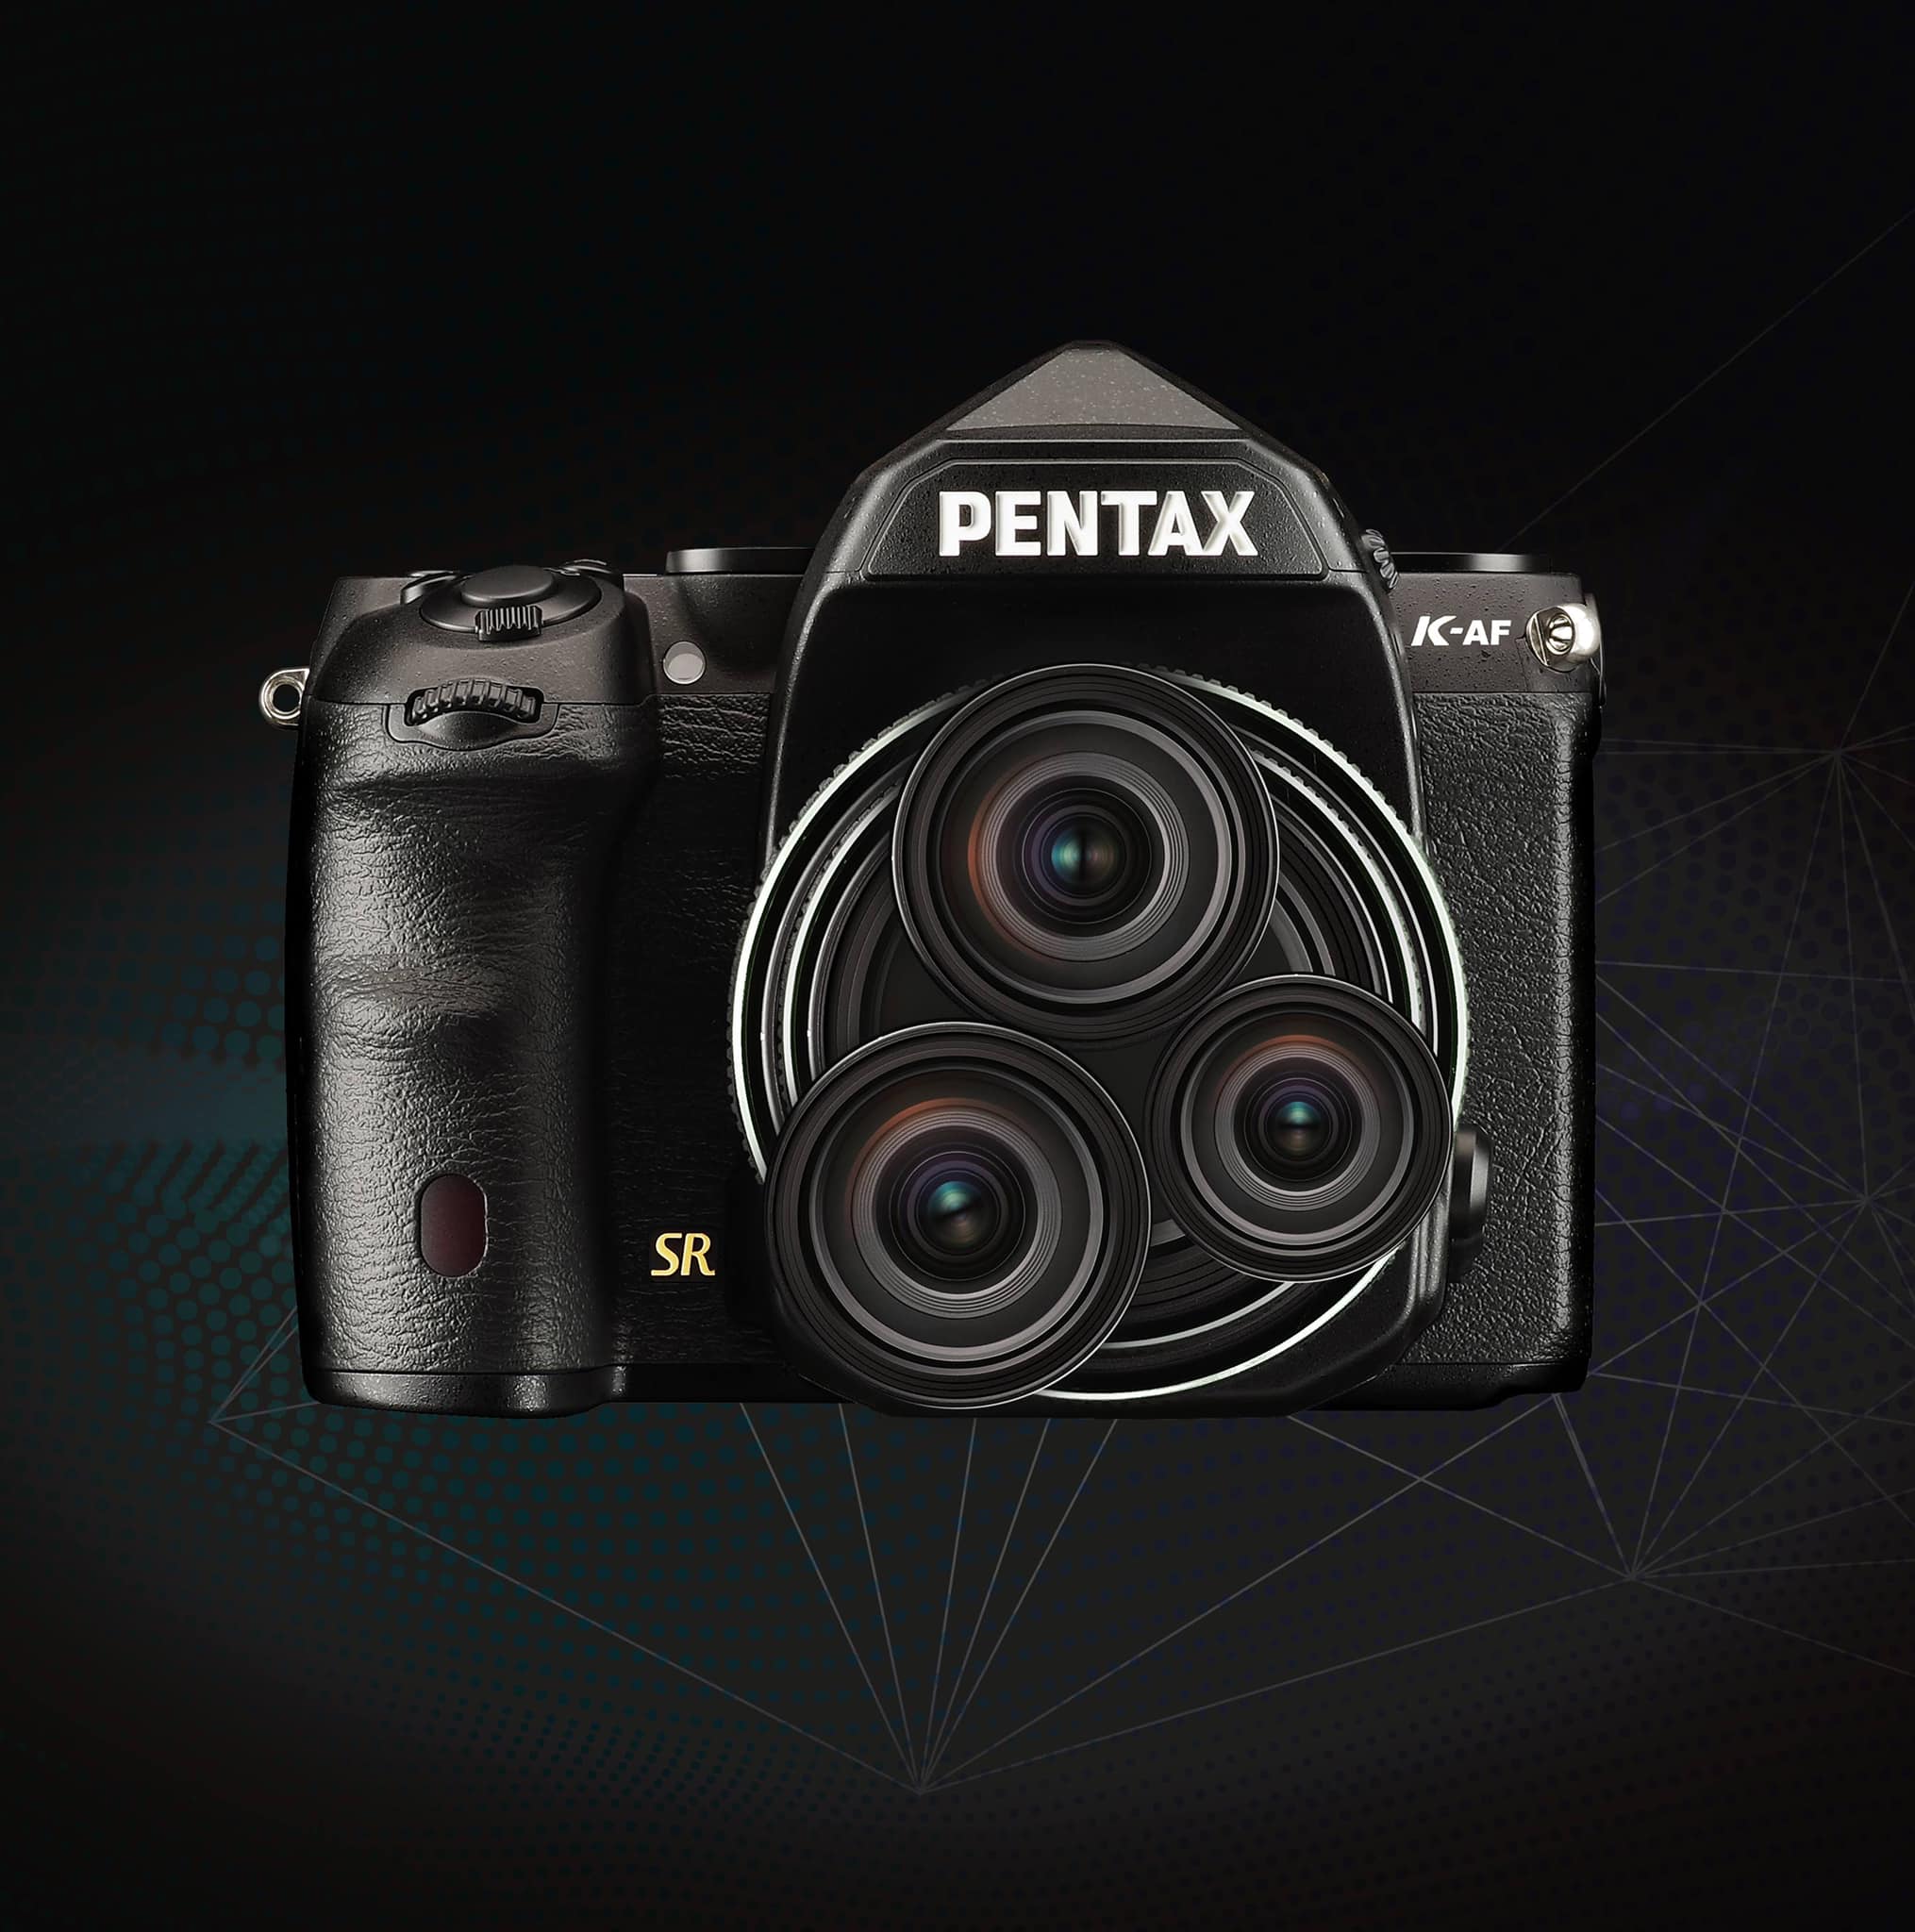 Ricoh introducing the new flagship Pentax KAF camera Pentax & Ricoh